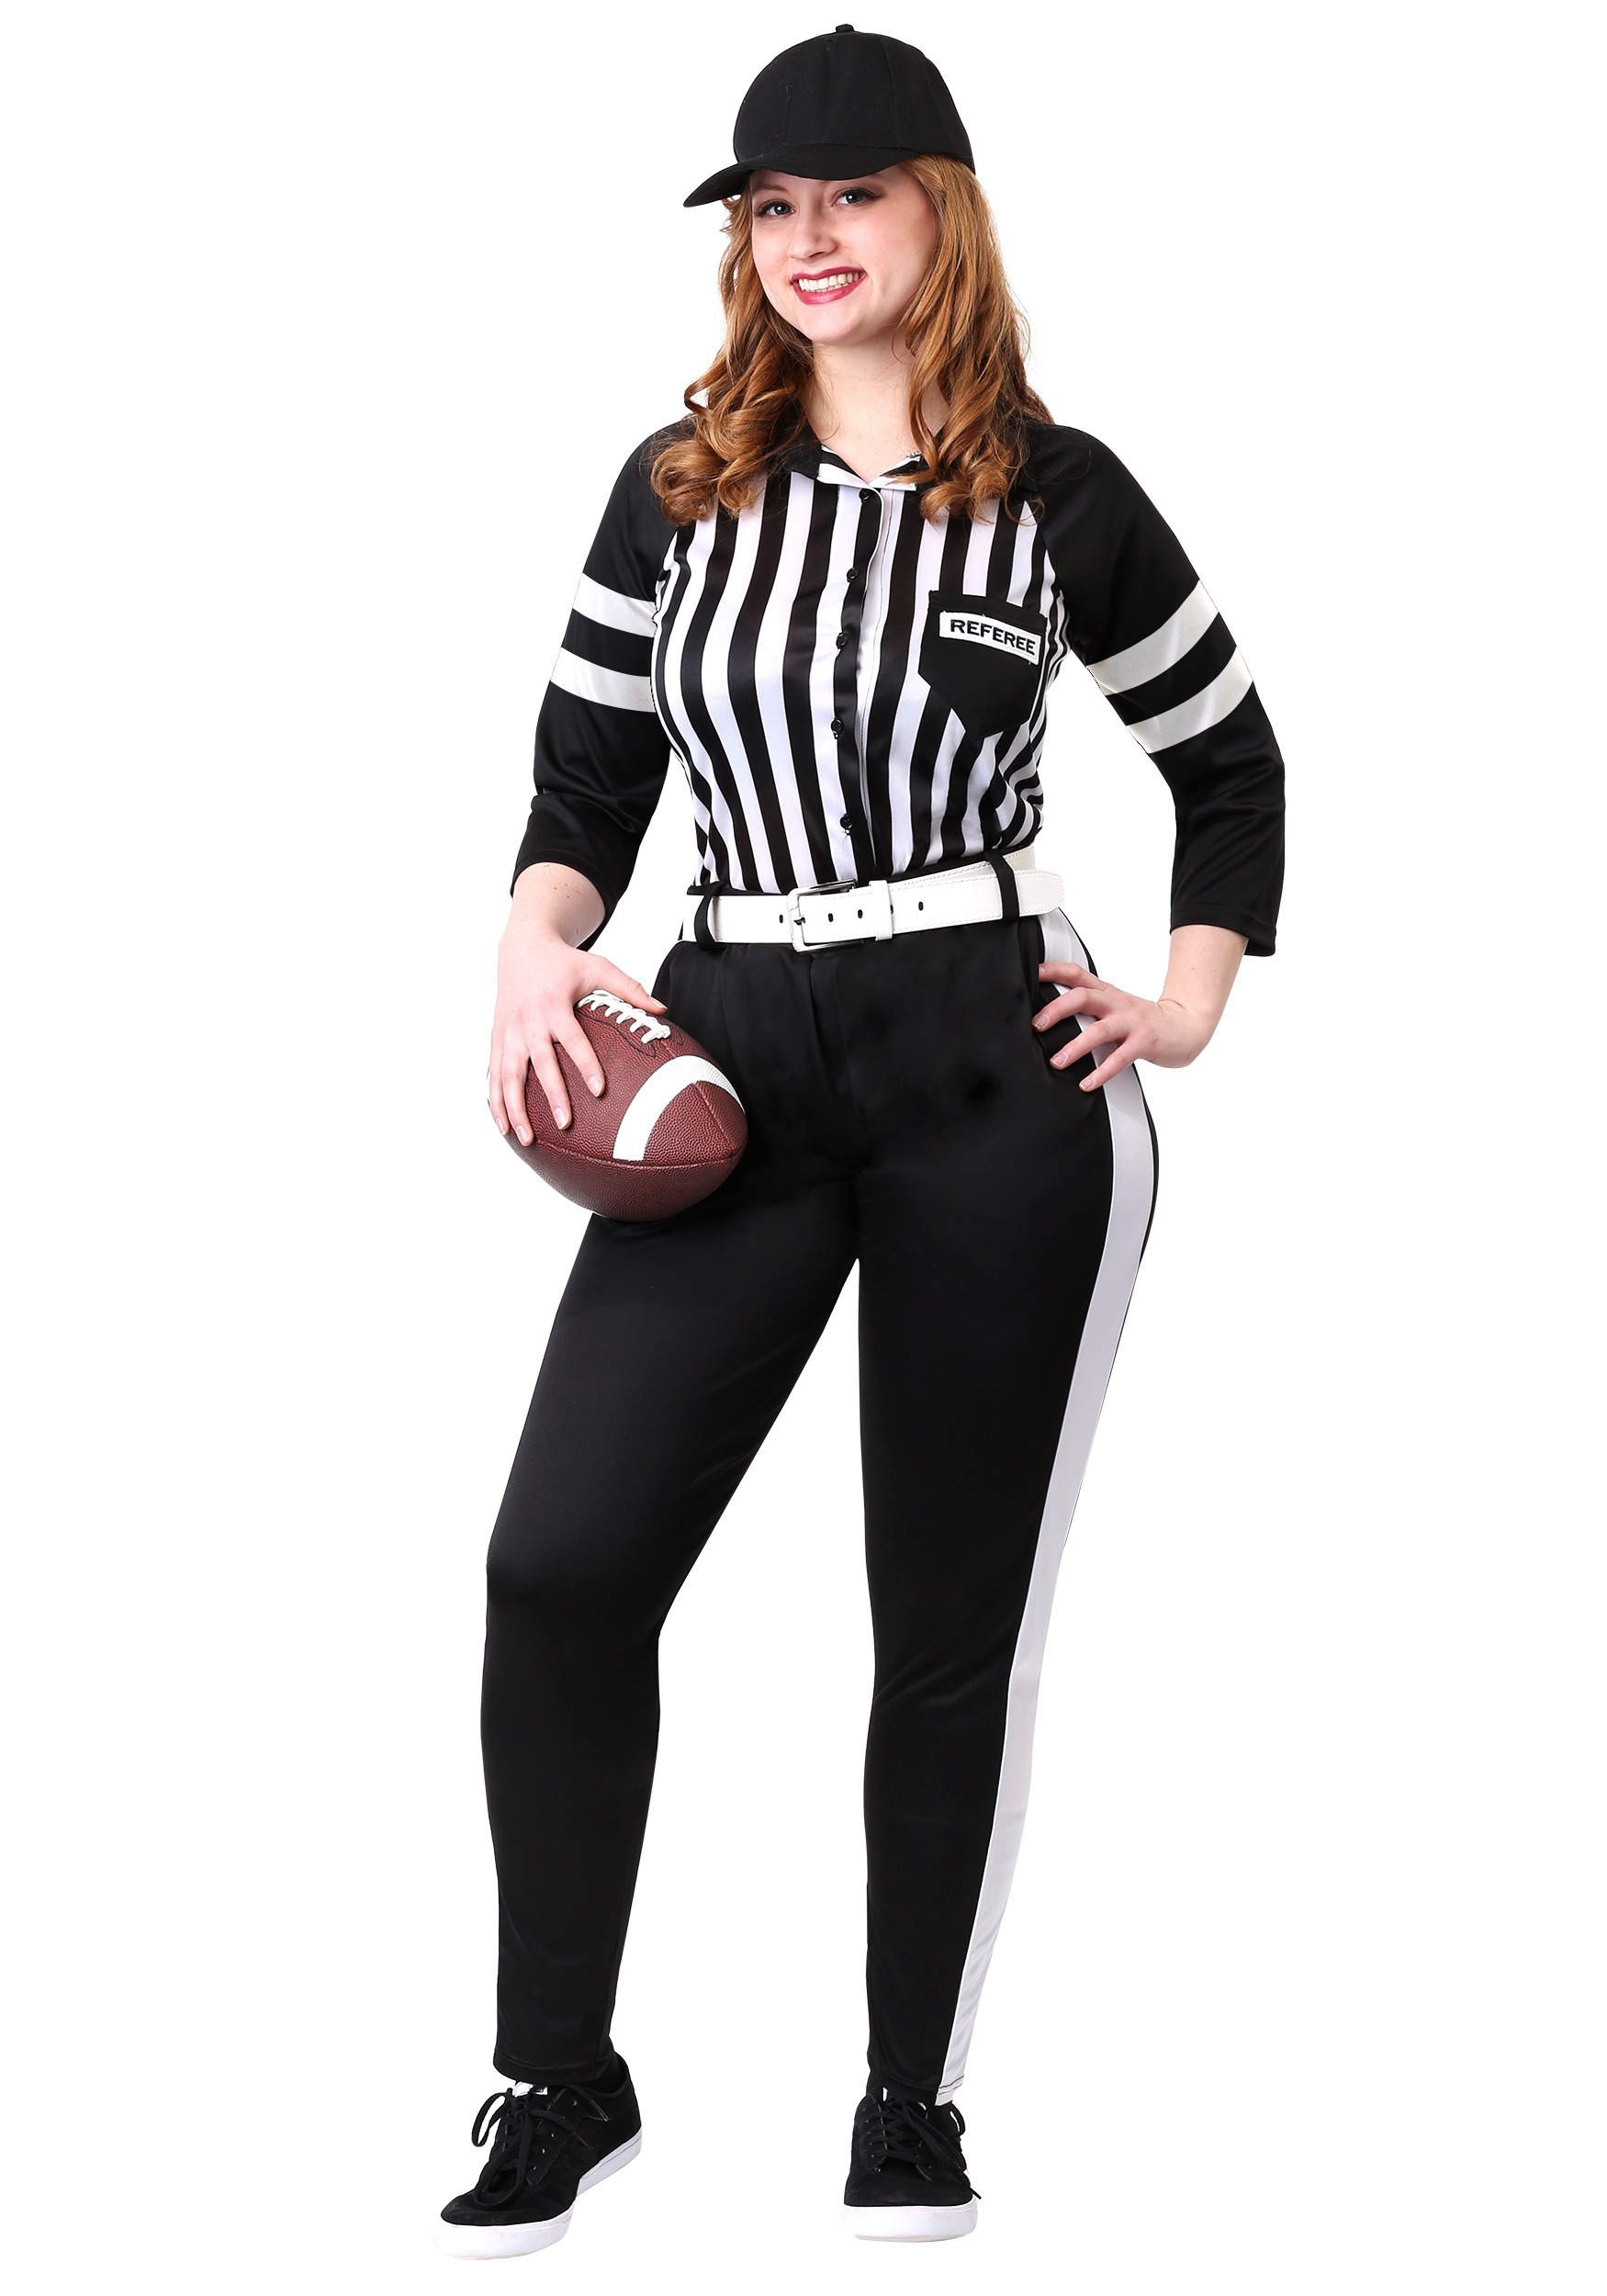 Women’s Plus Size Referee Costume